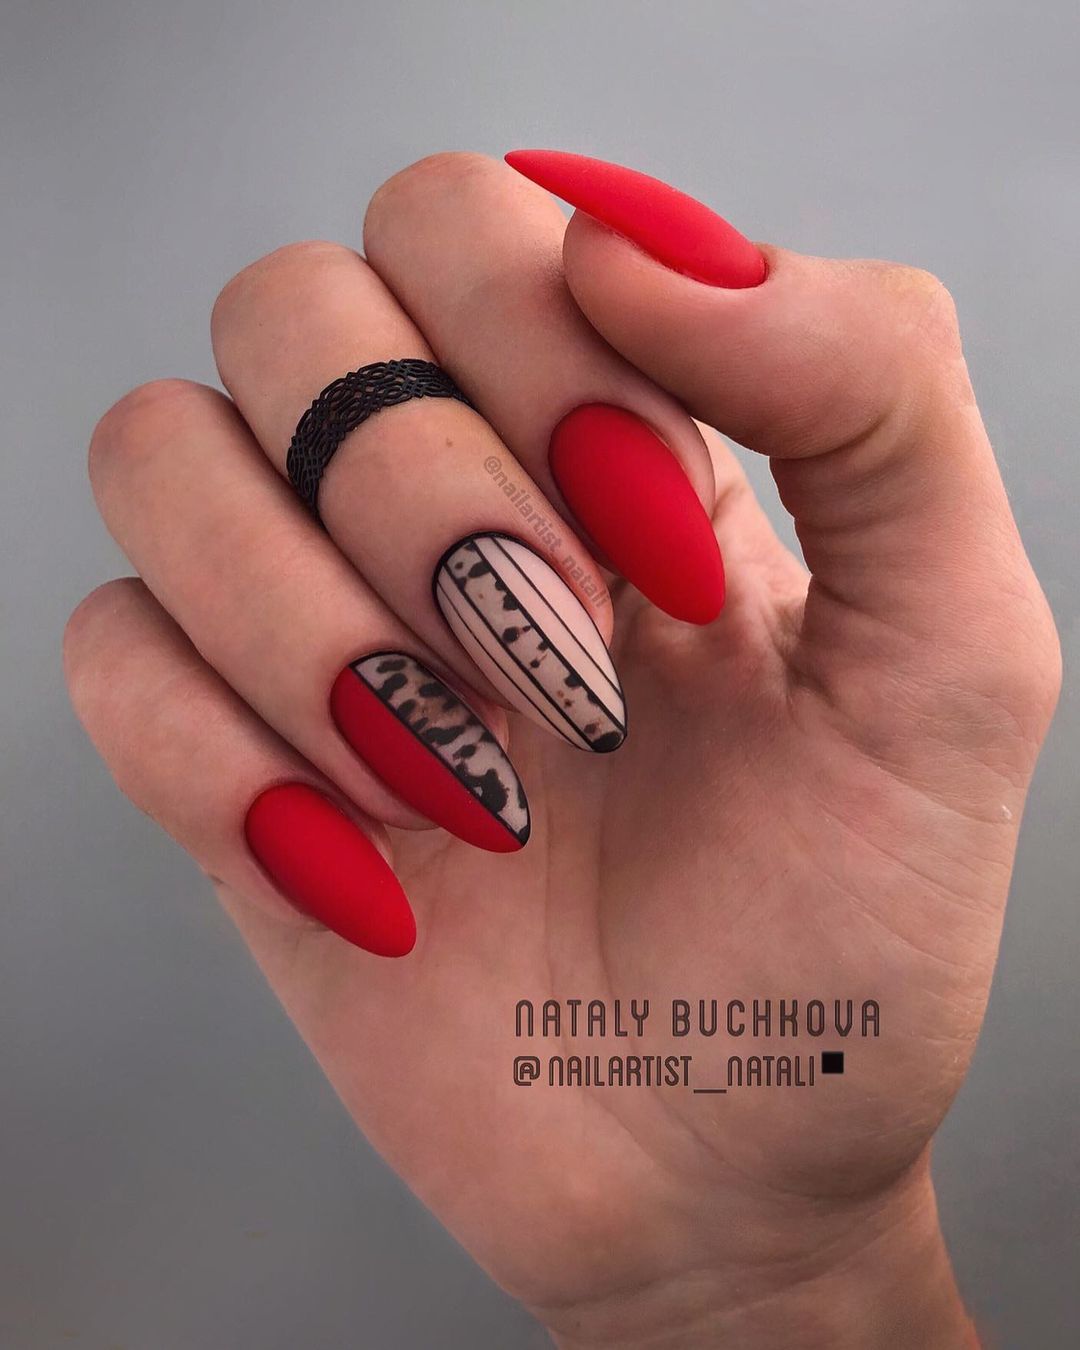 red wedding nails black